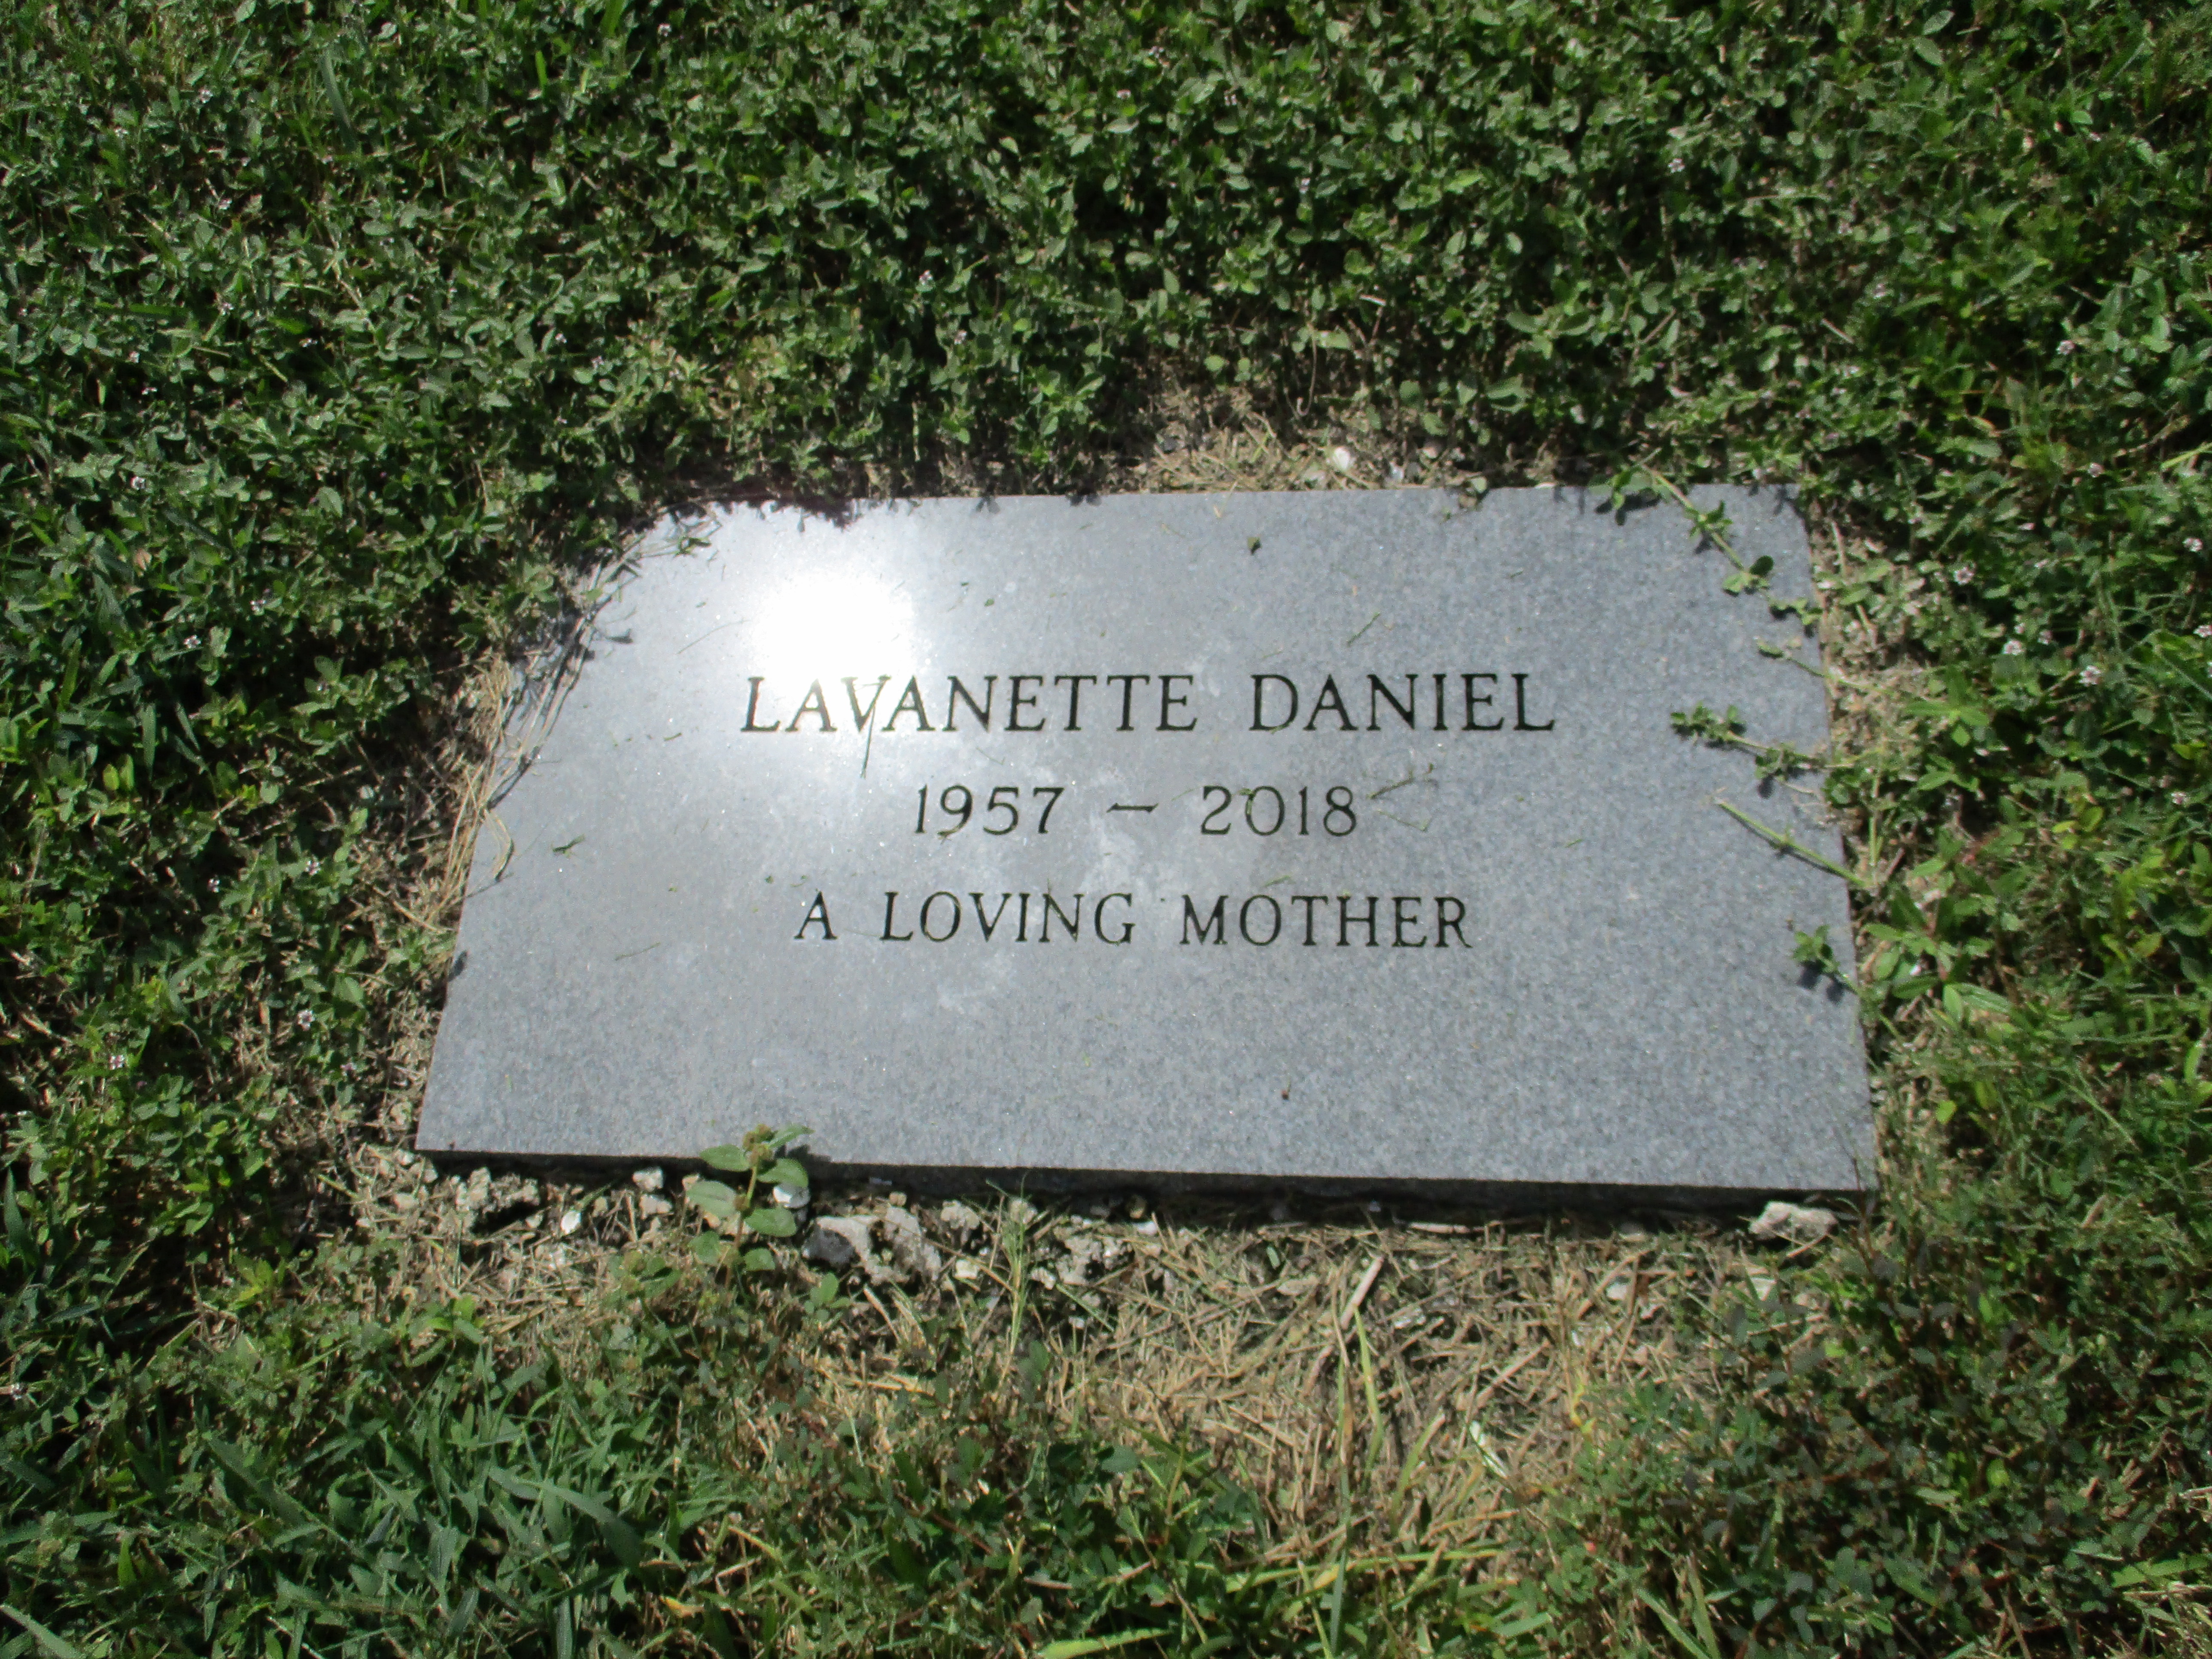 Lavanette Daniel